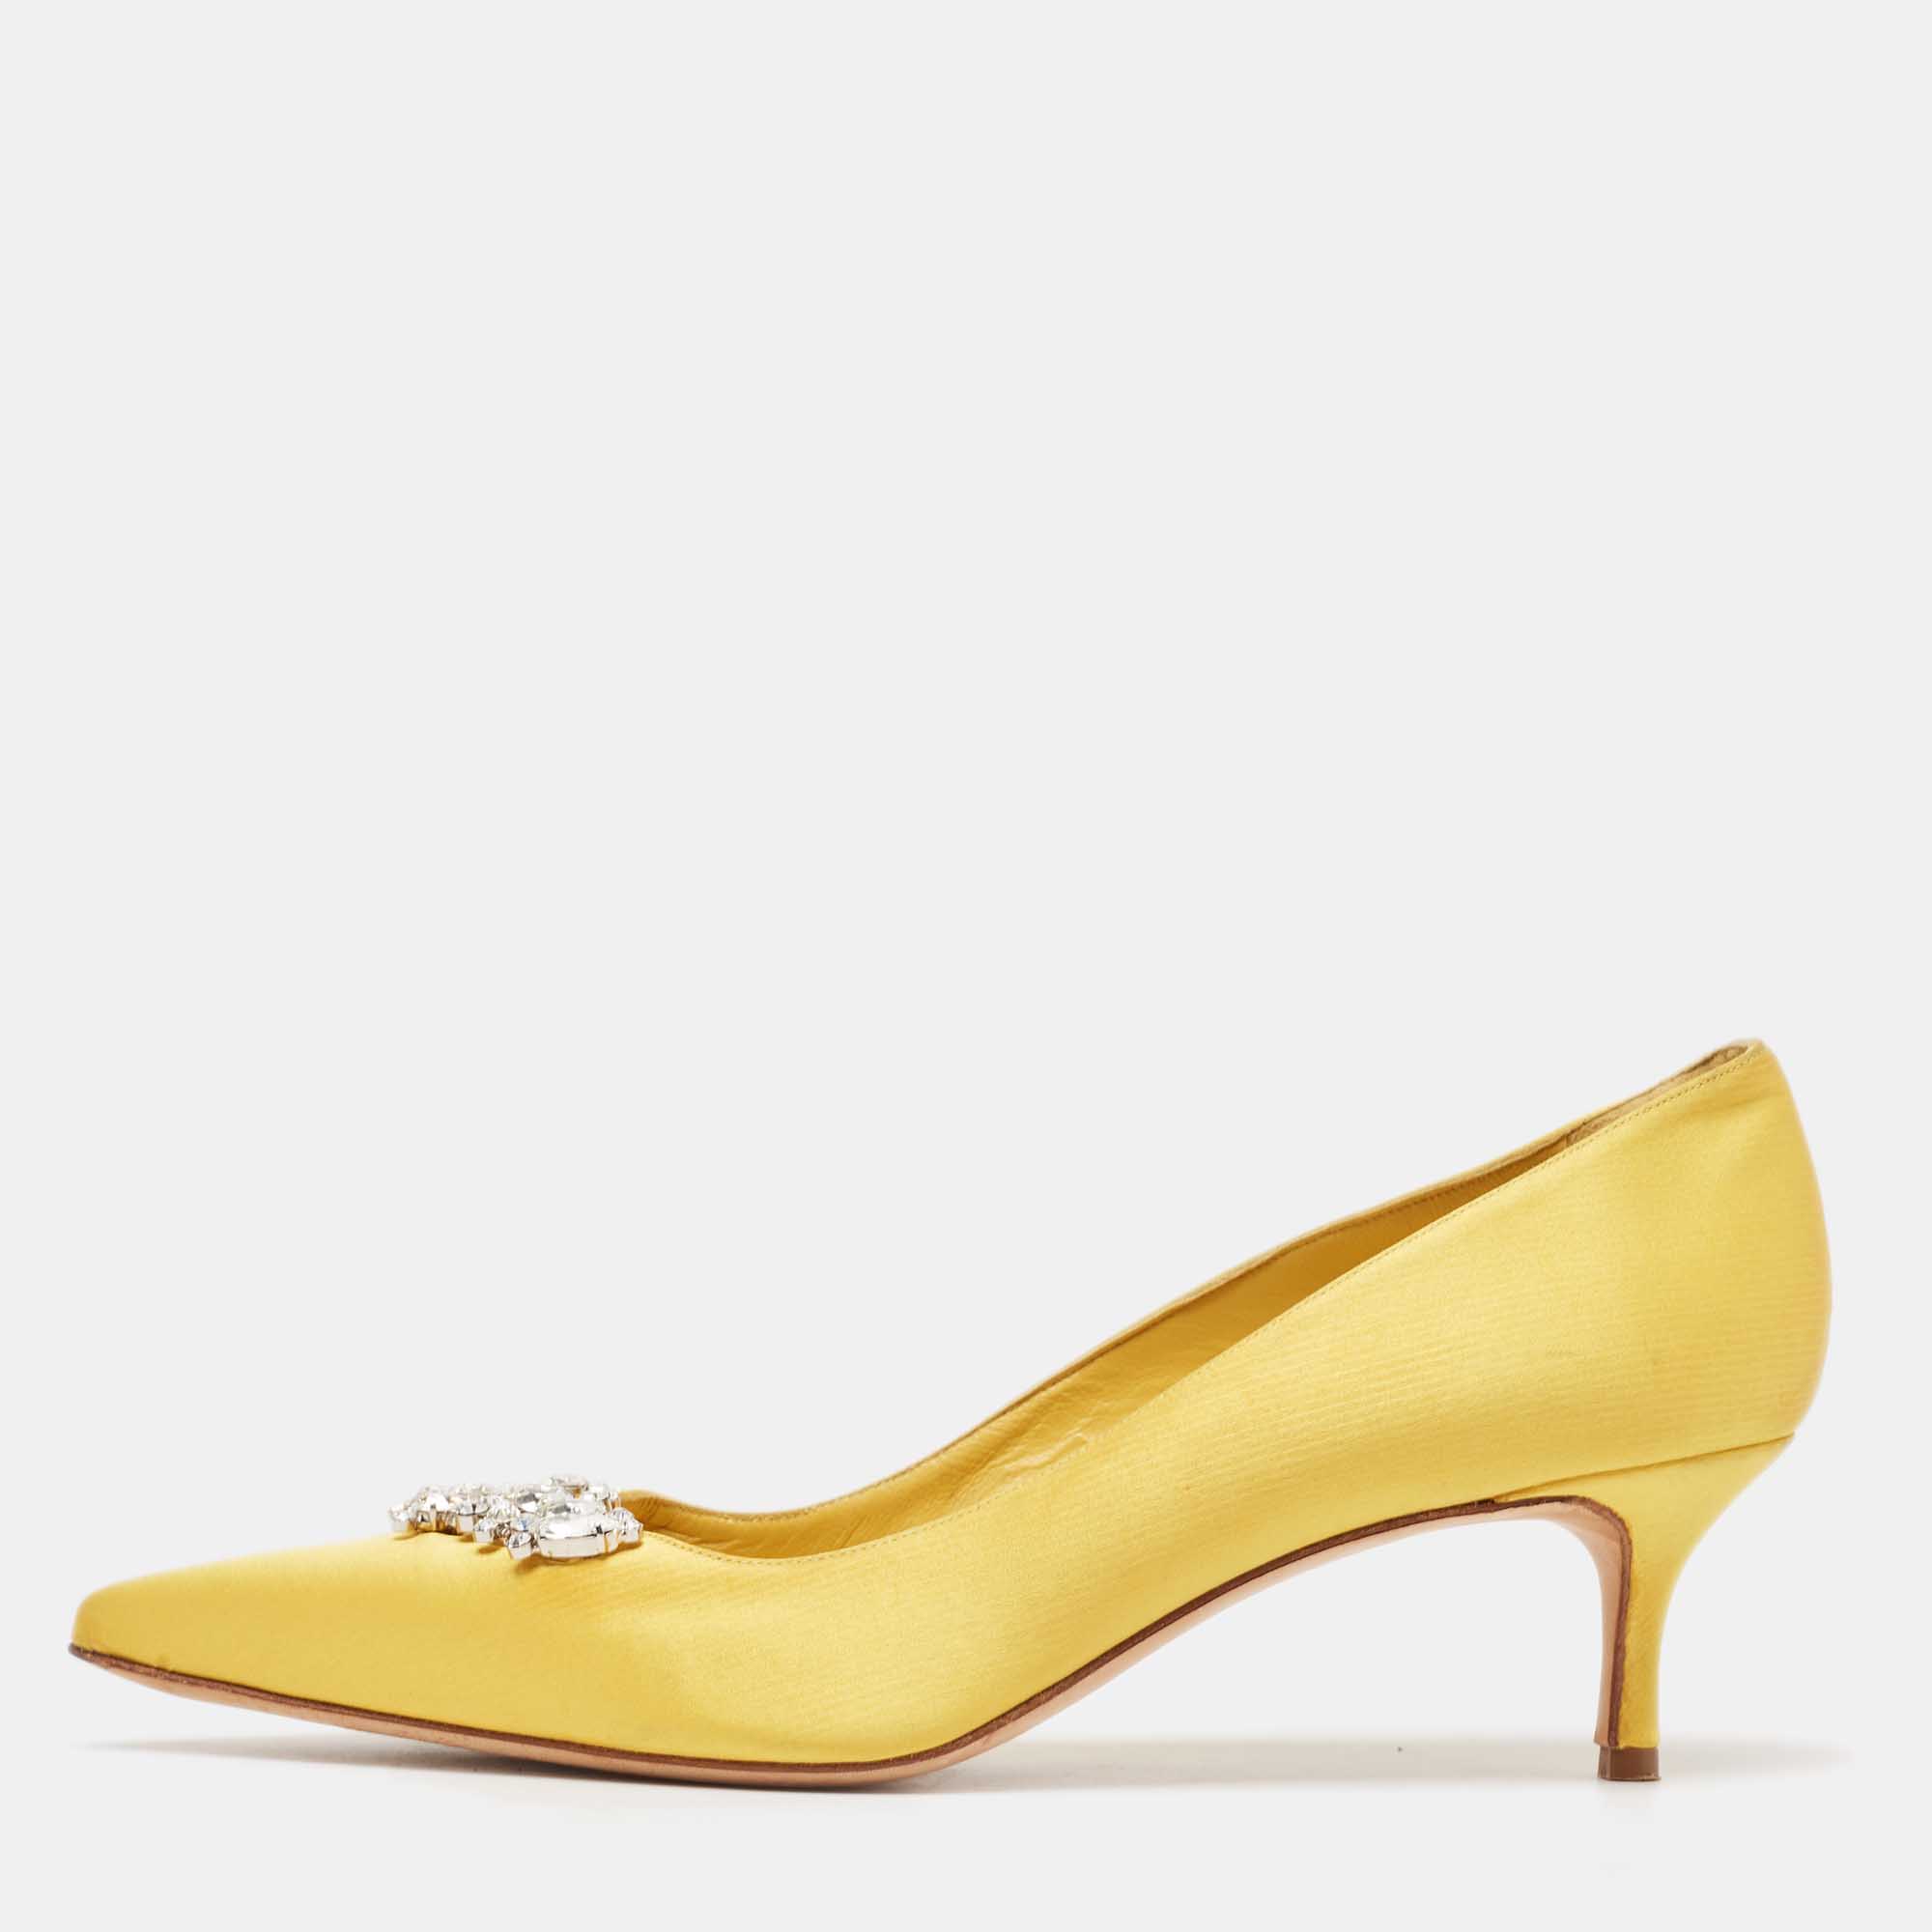 Manolo blahnik yellow satin lurum crystal embellished pointed toe pumps size 41